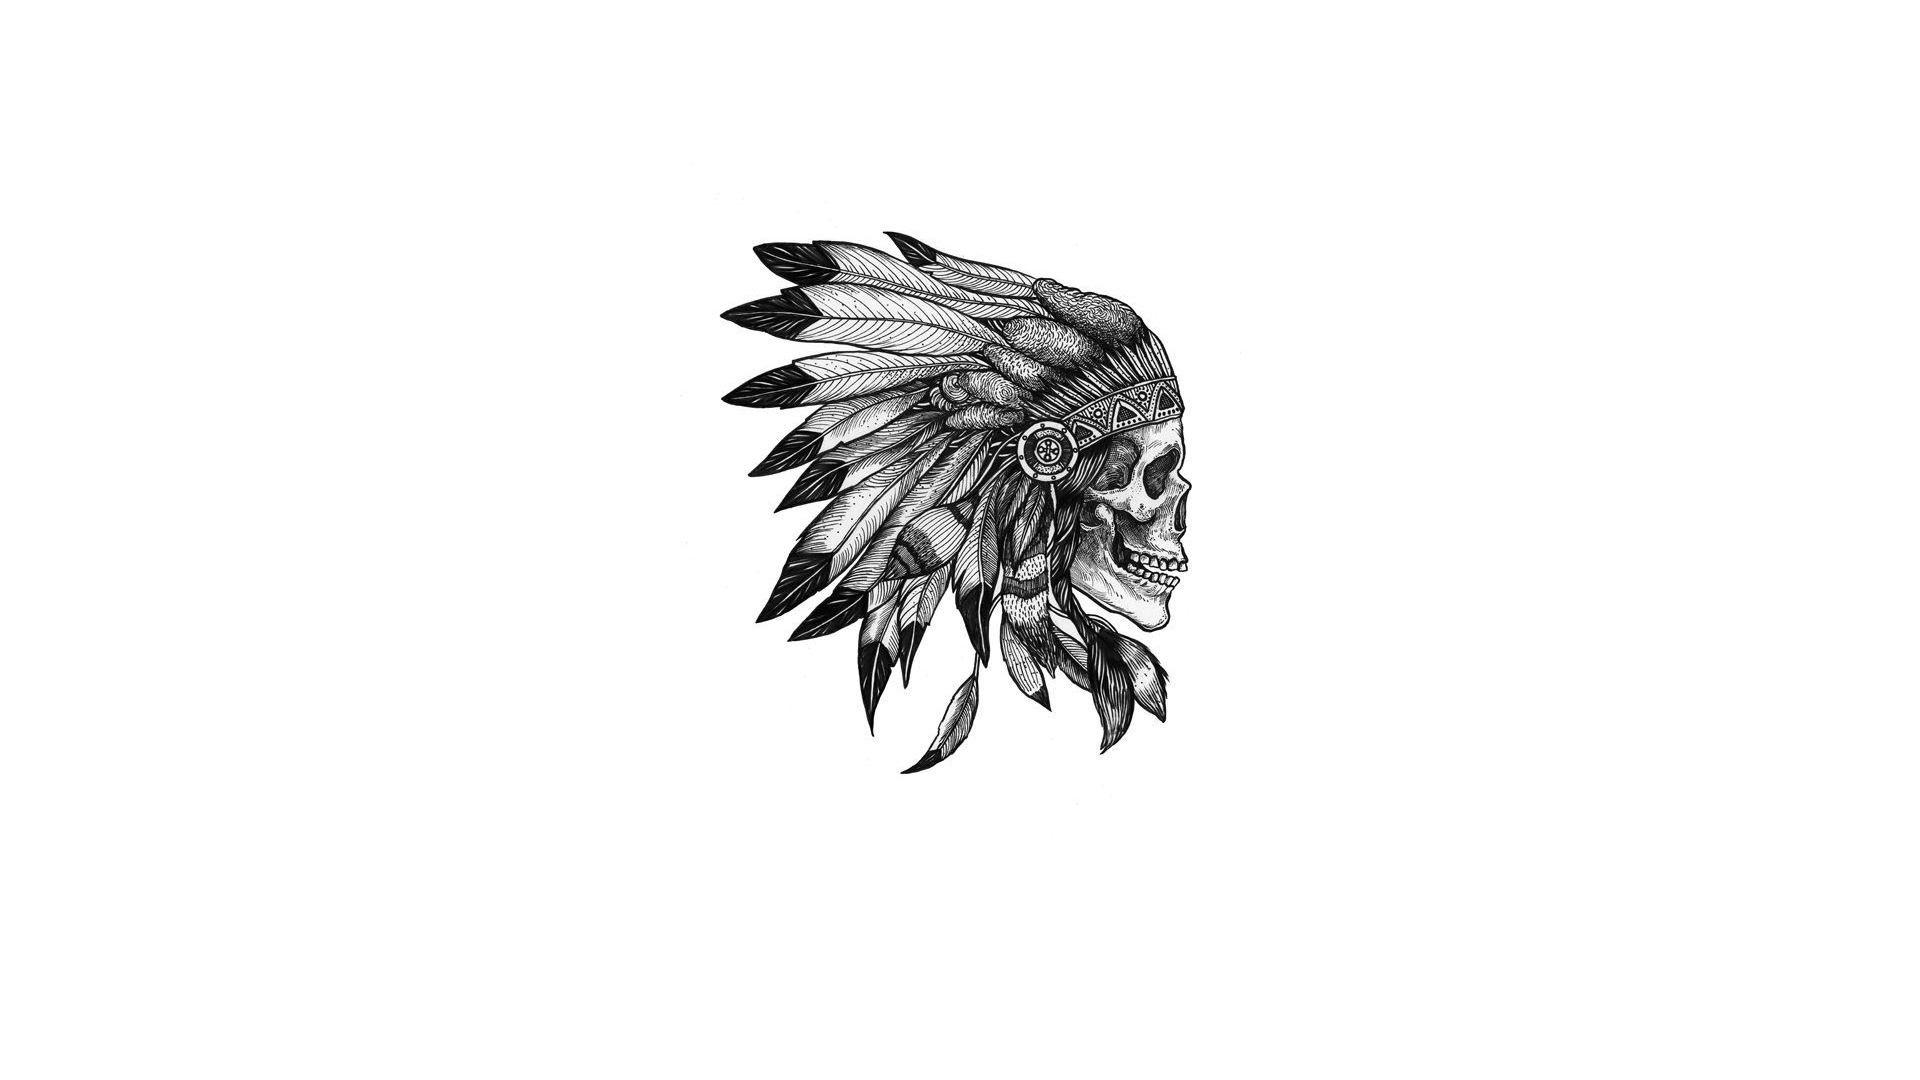 Digital Art Minimalism White Background Skull Native American Clothing Feathers Monochrome Drawing H 1920x1080